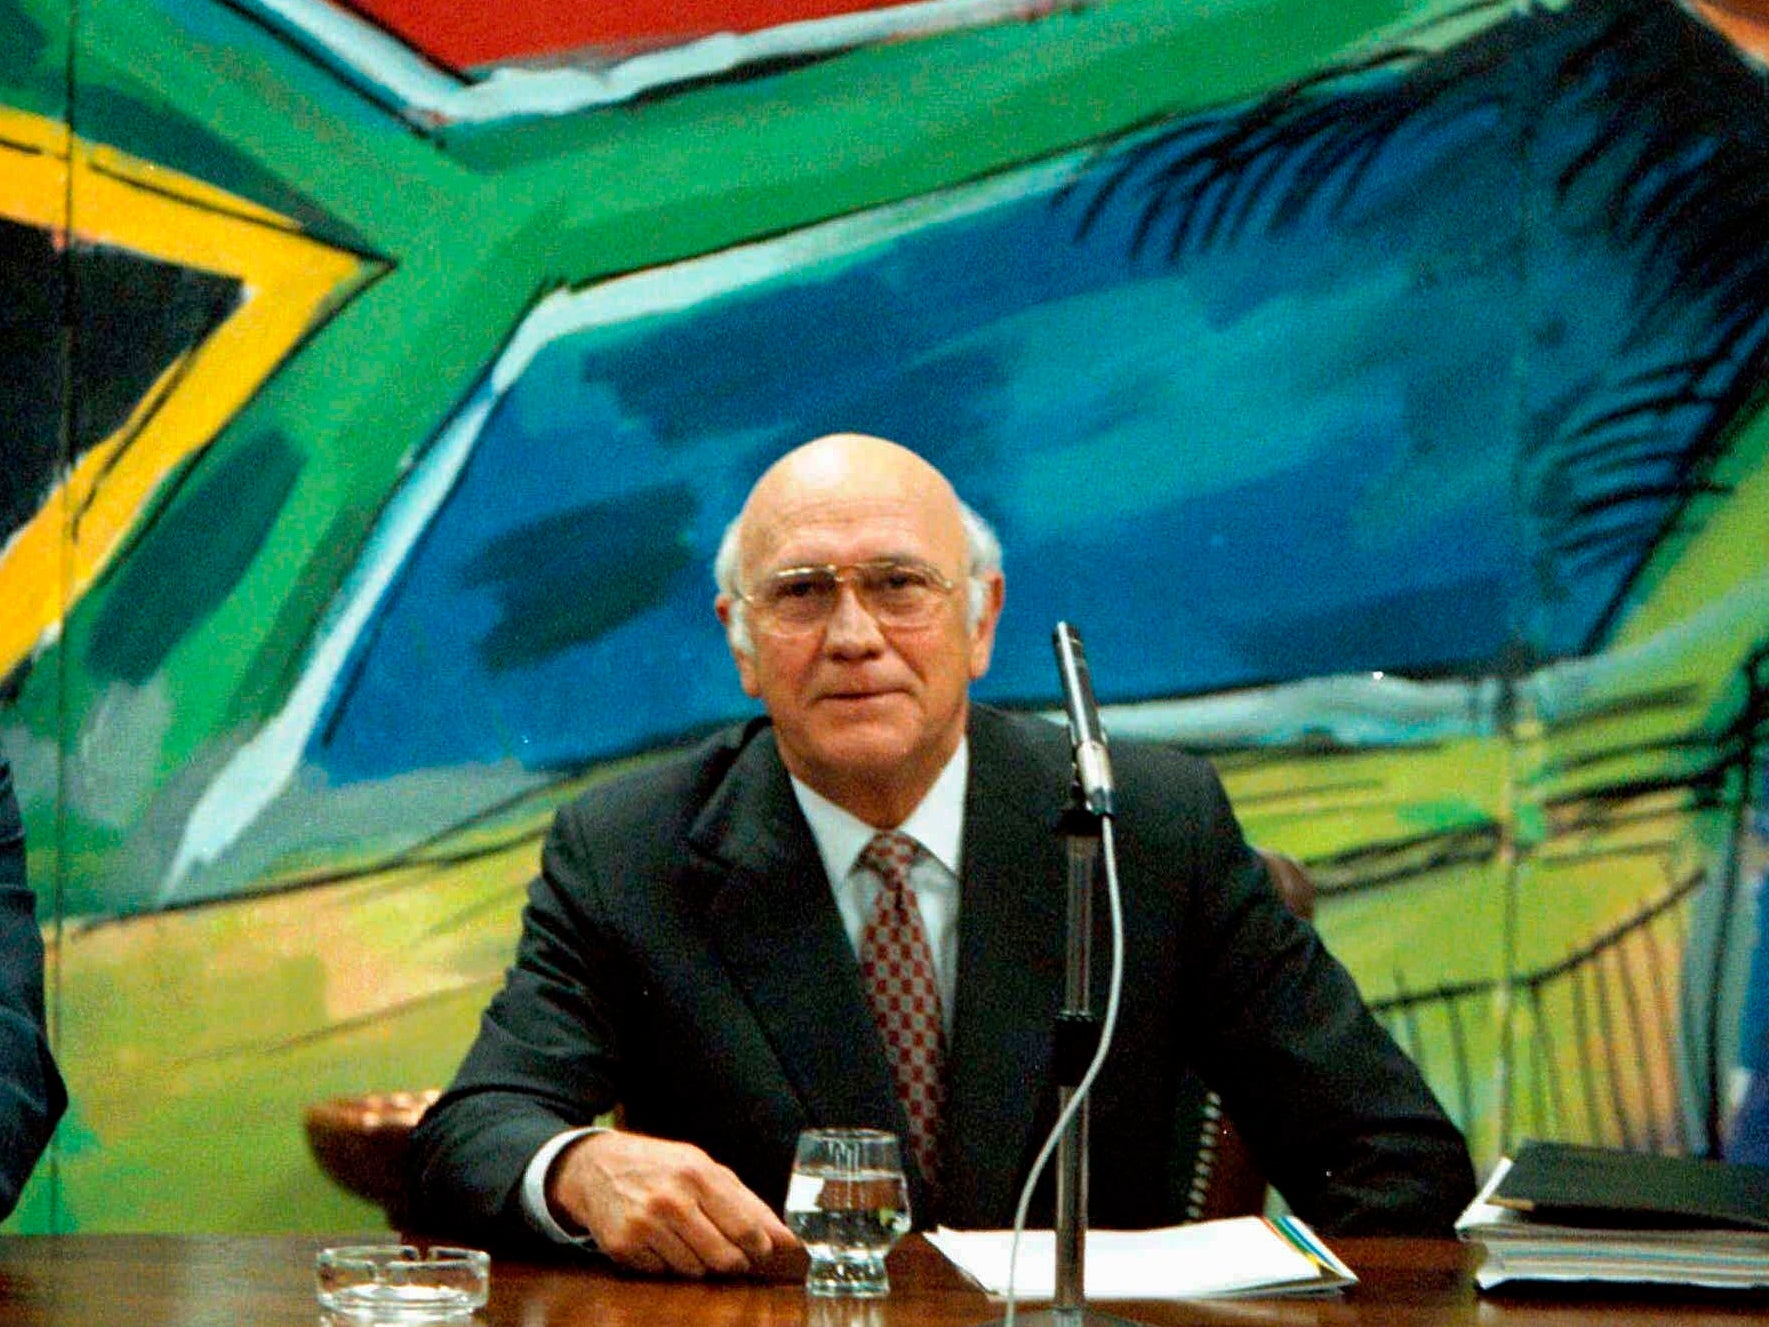 The former president in 1997